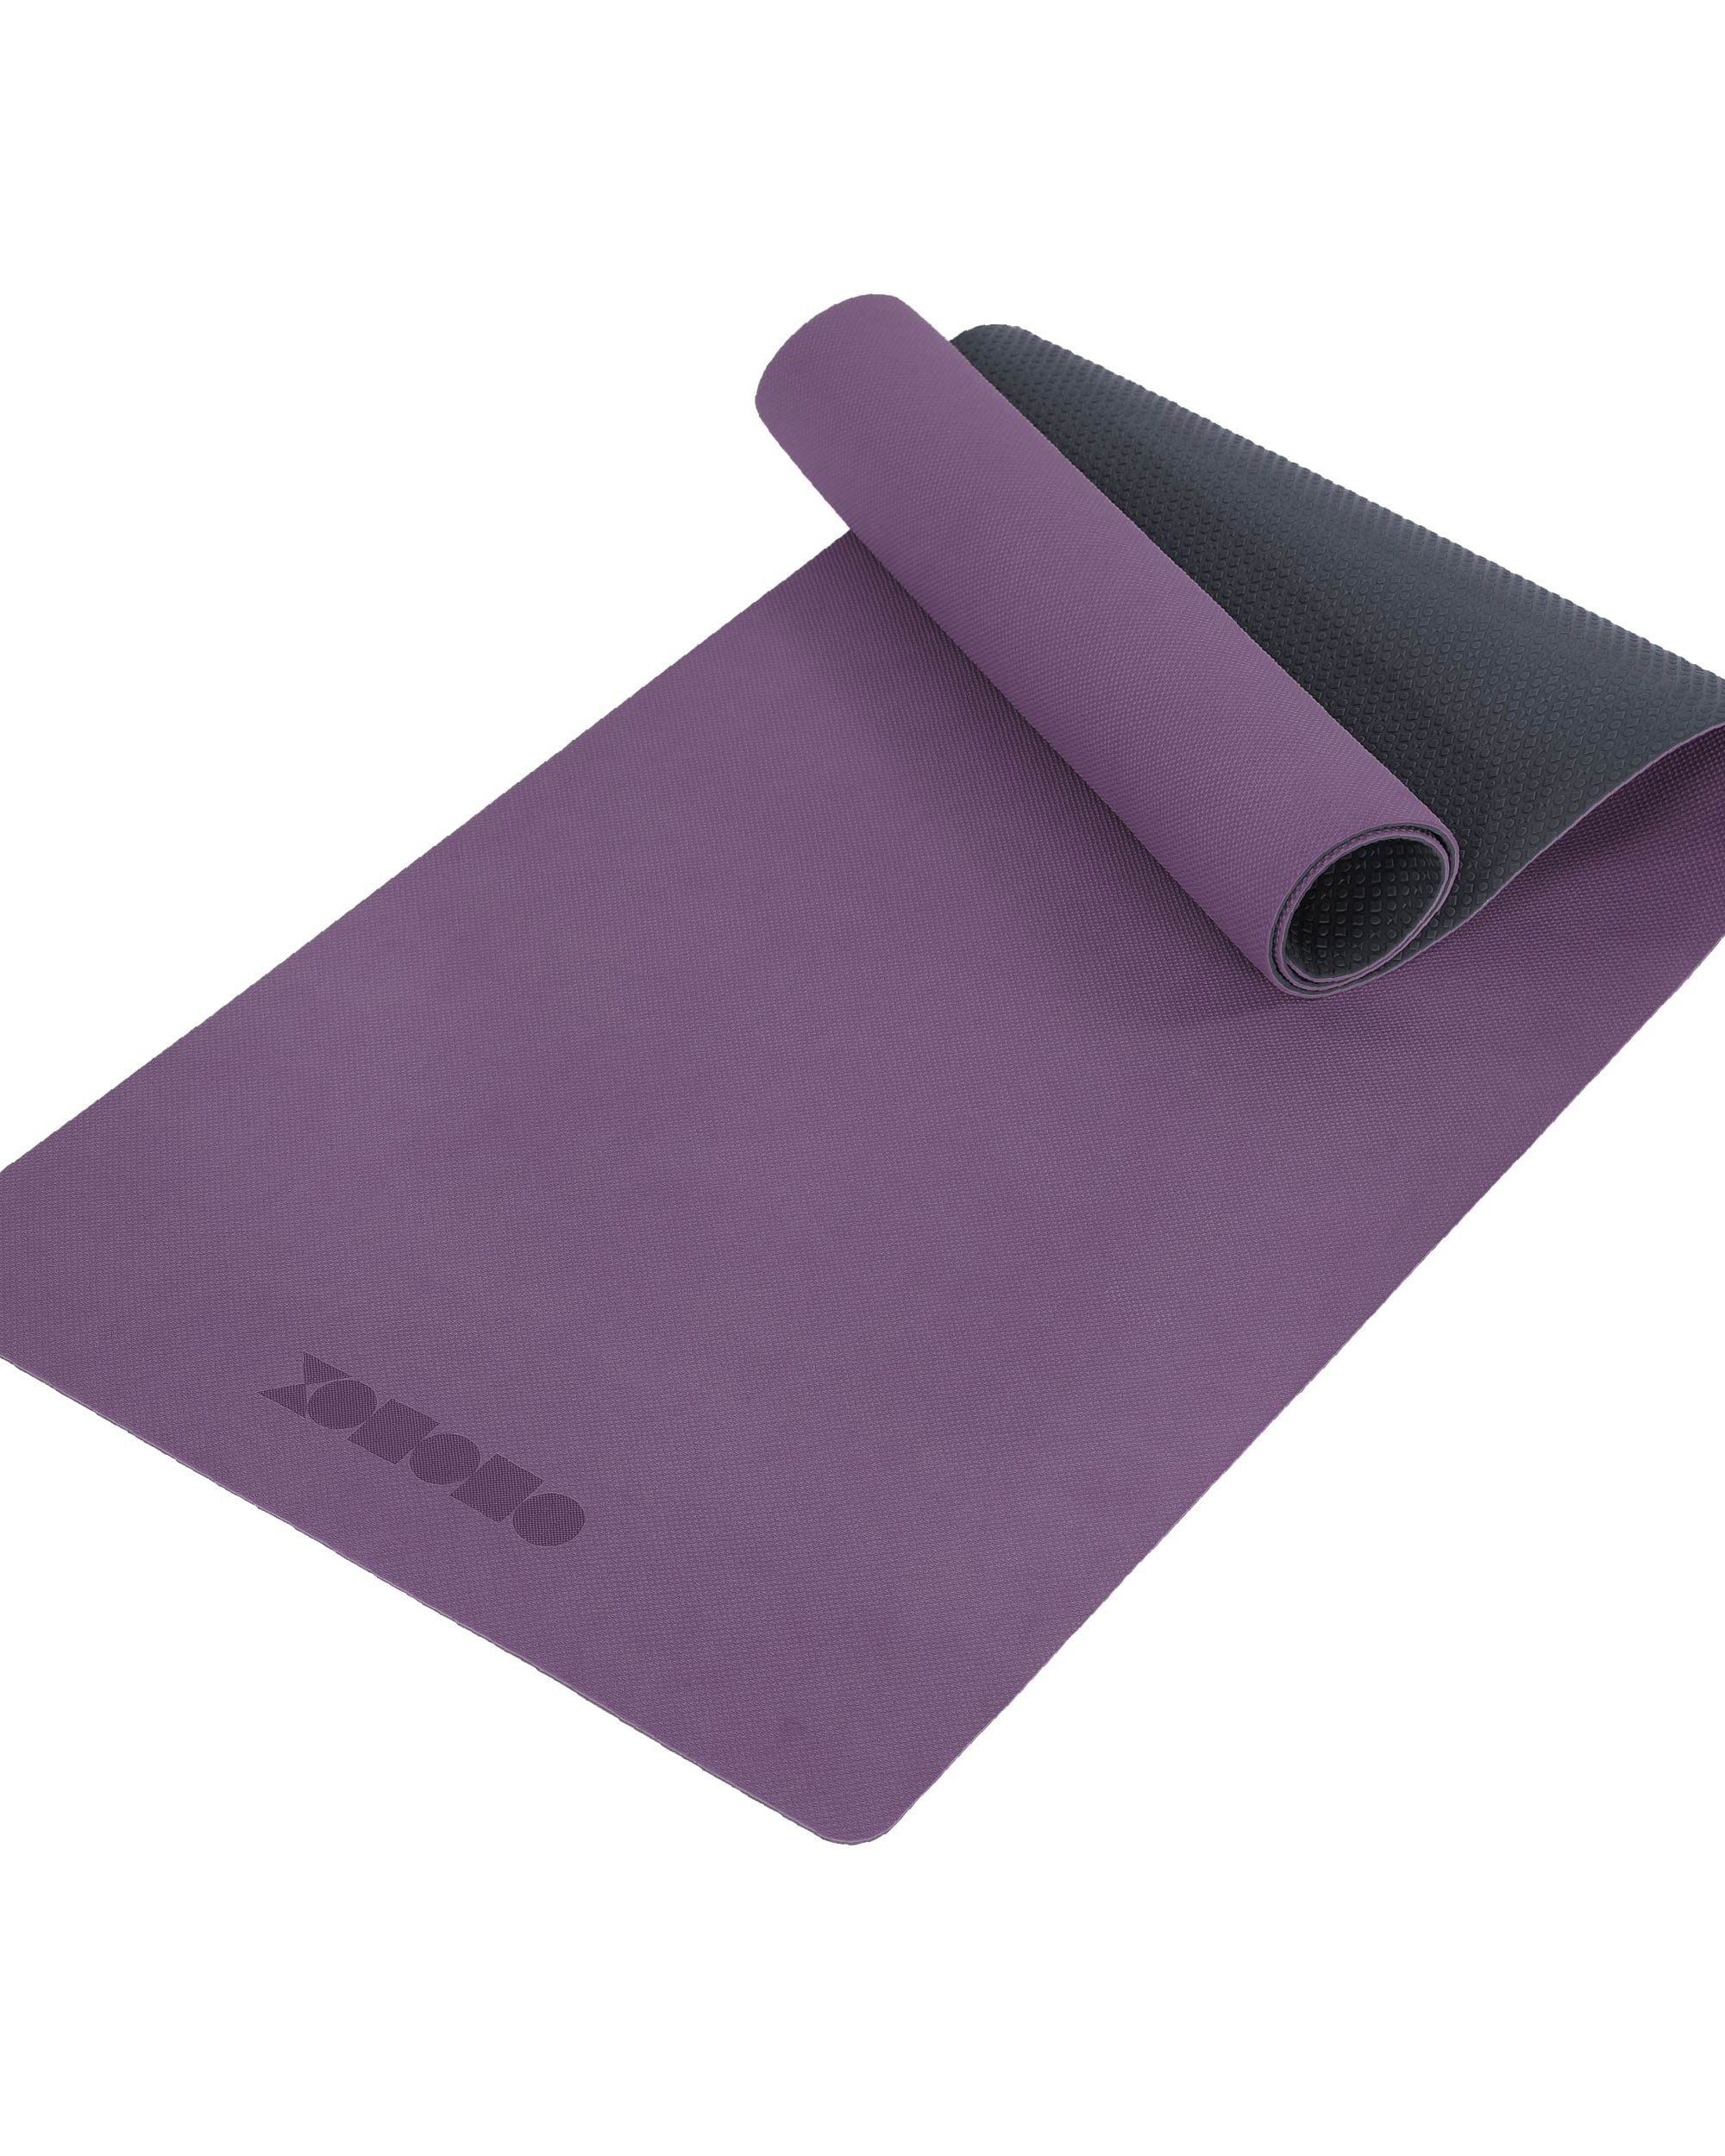 Eco-friendly TPE non-slip sports fitness yoga mat Purple/Navy - ododos